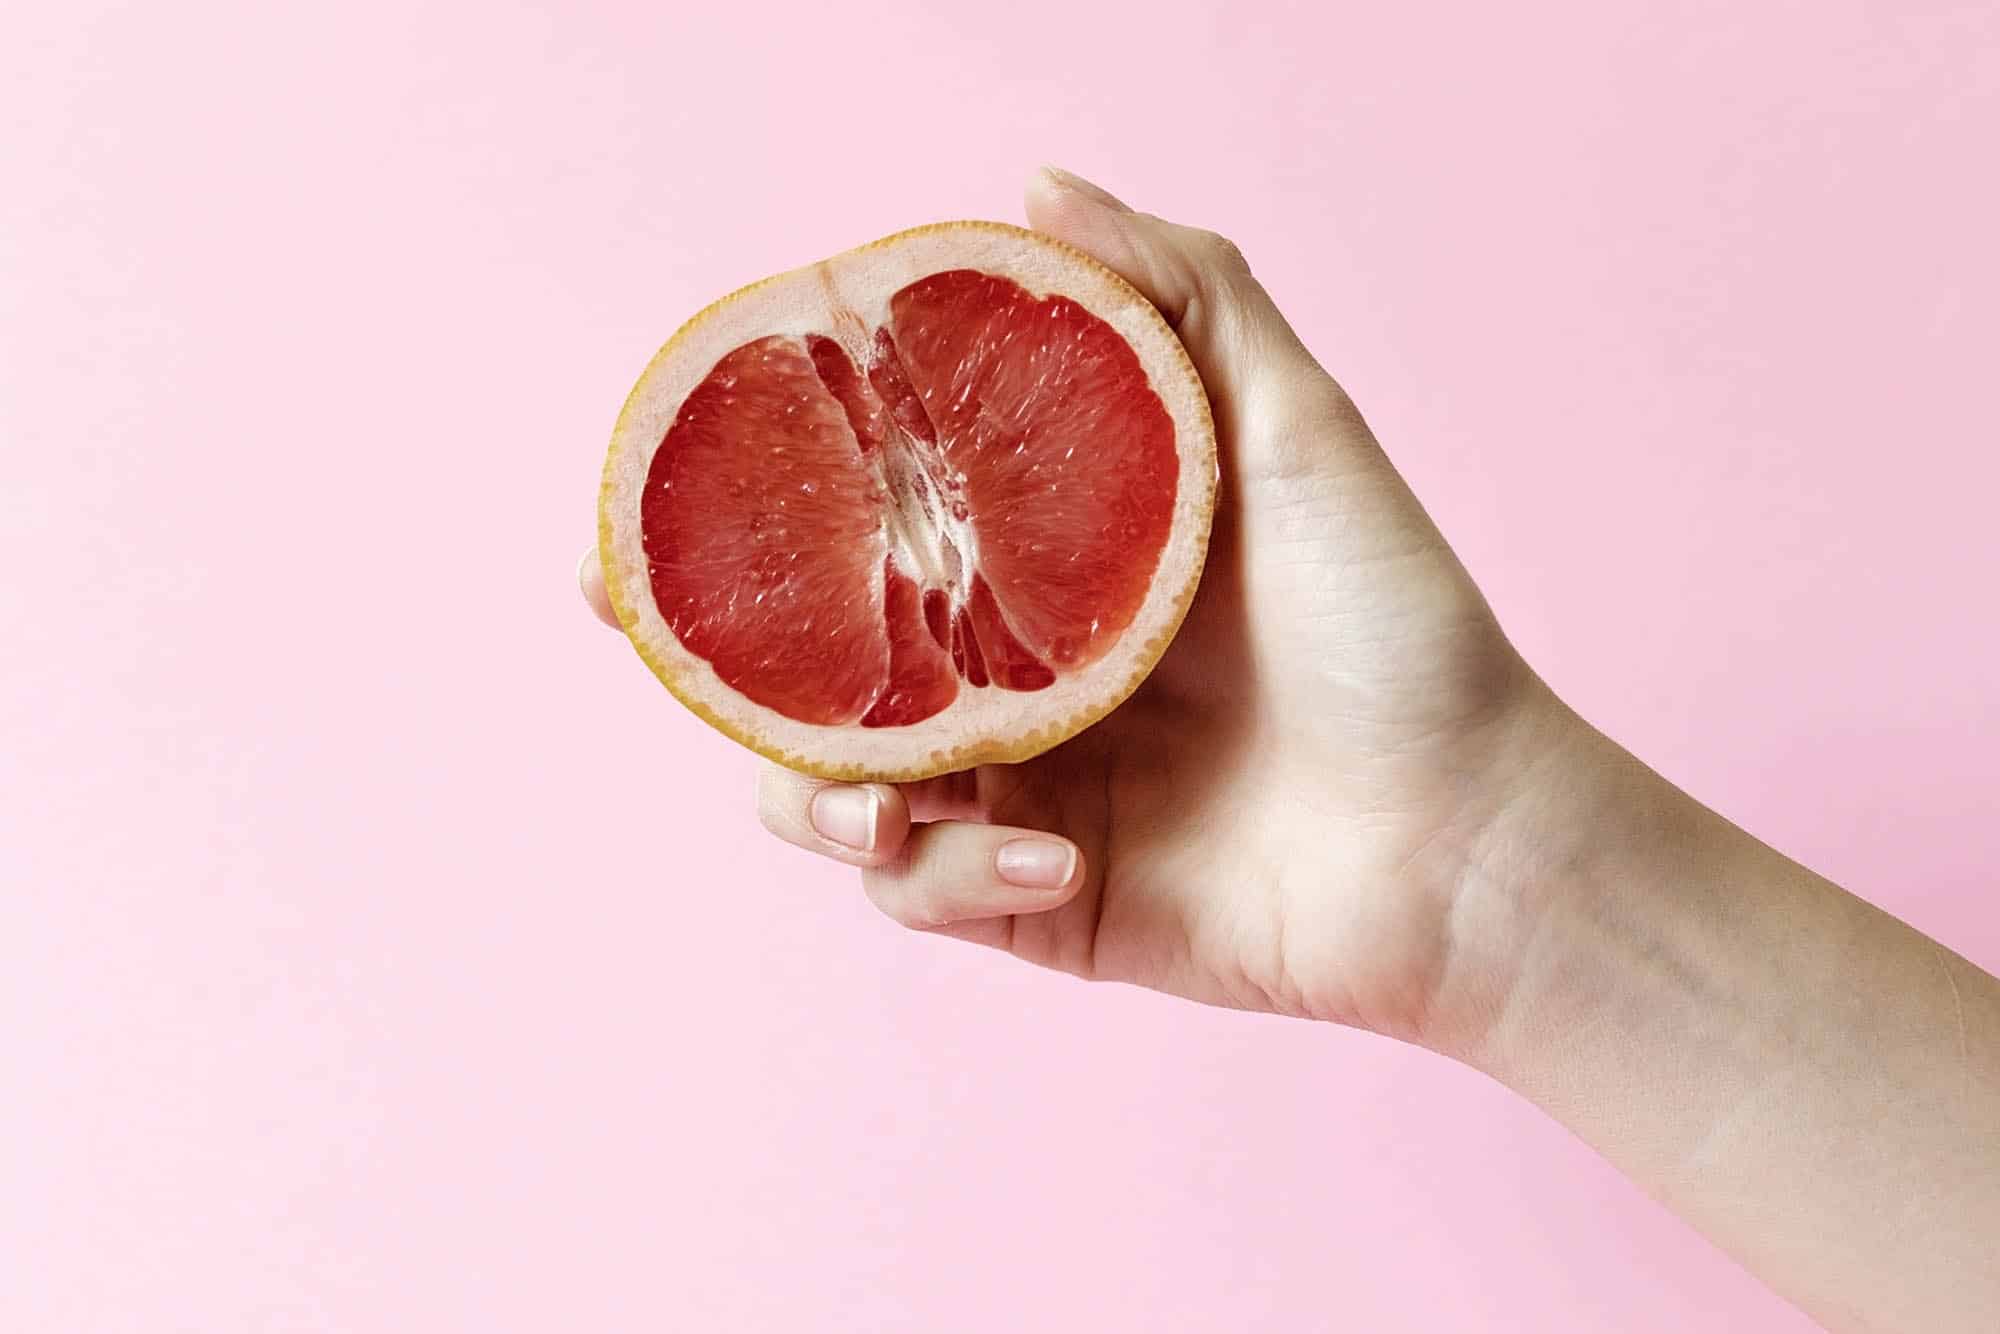 Female hands holding half grapefruit on pink background, female masturbation concept